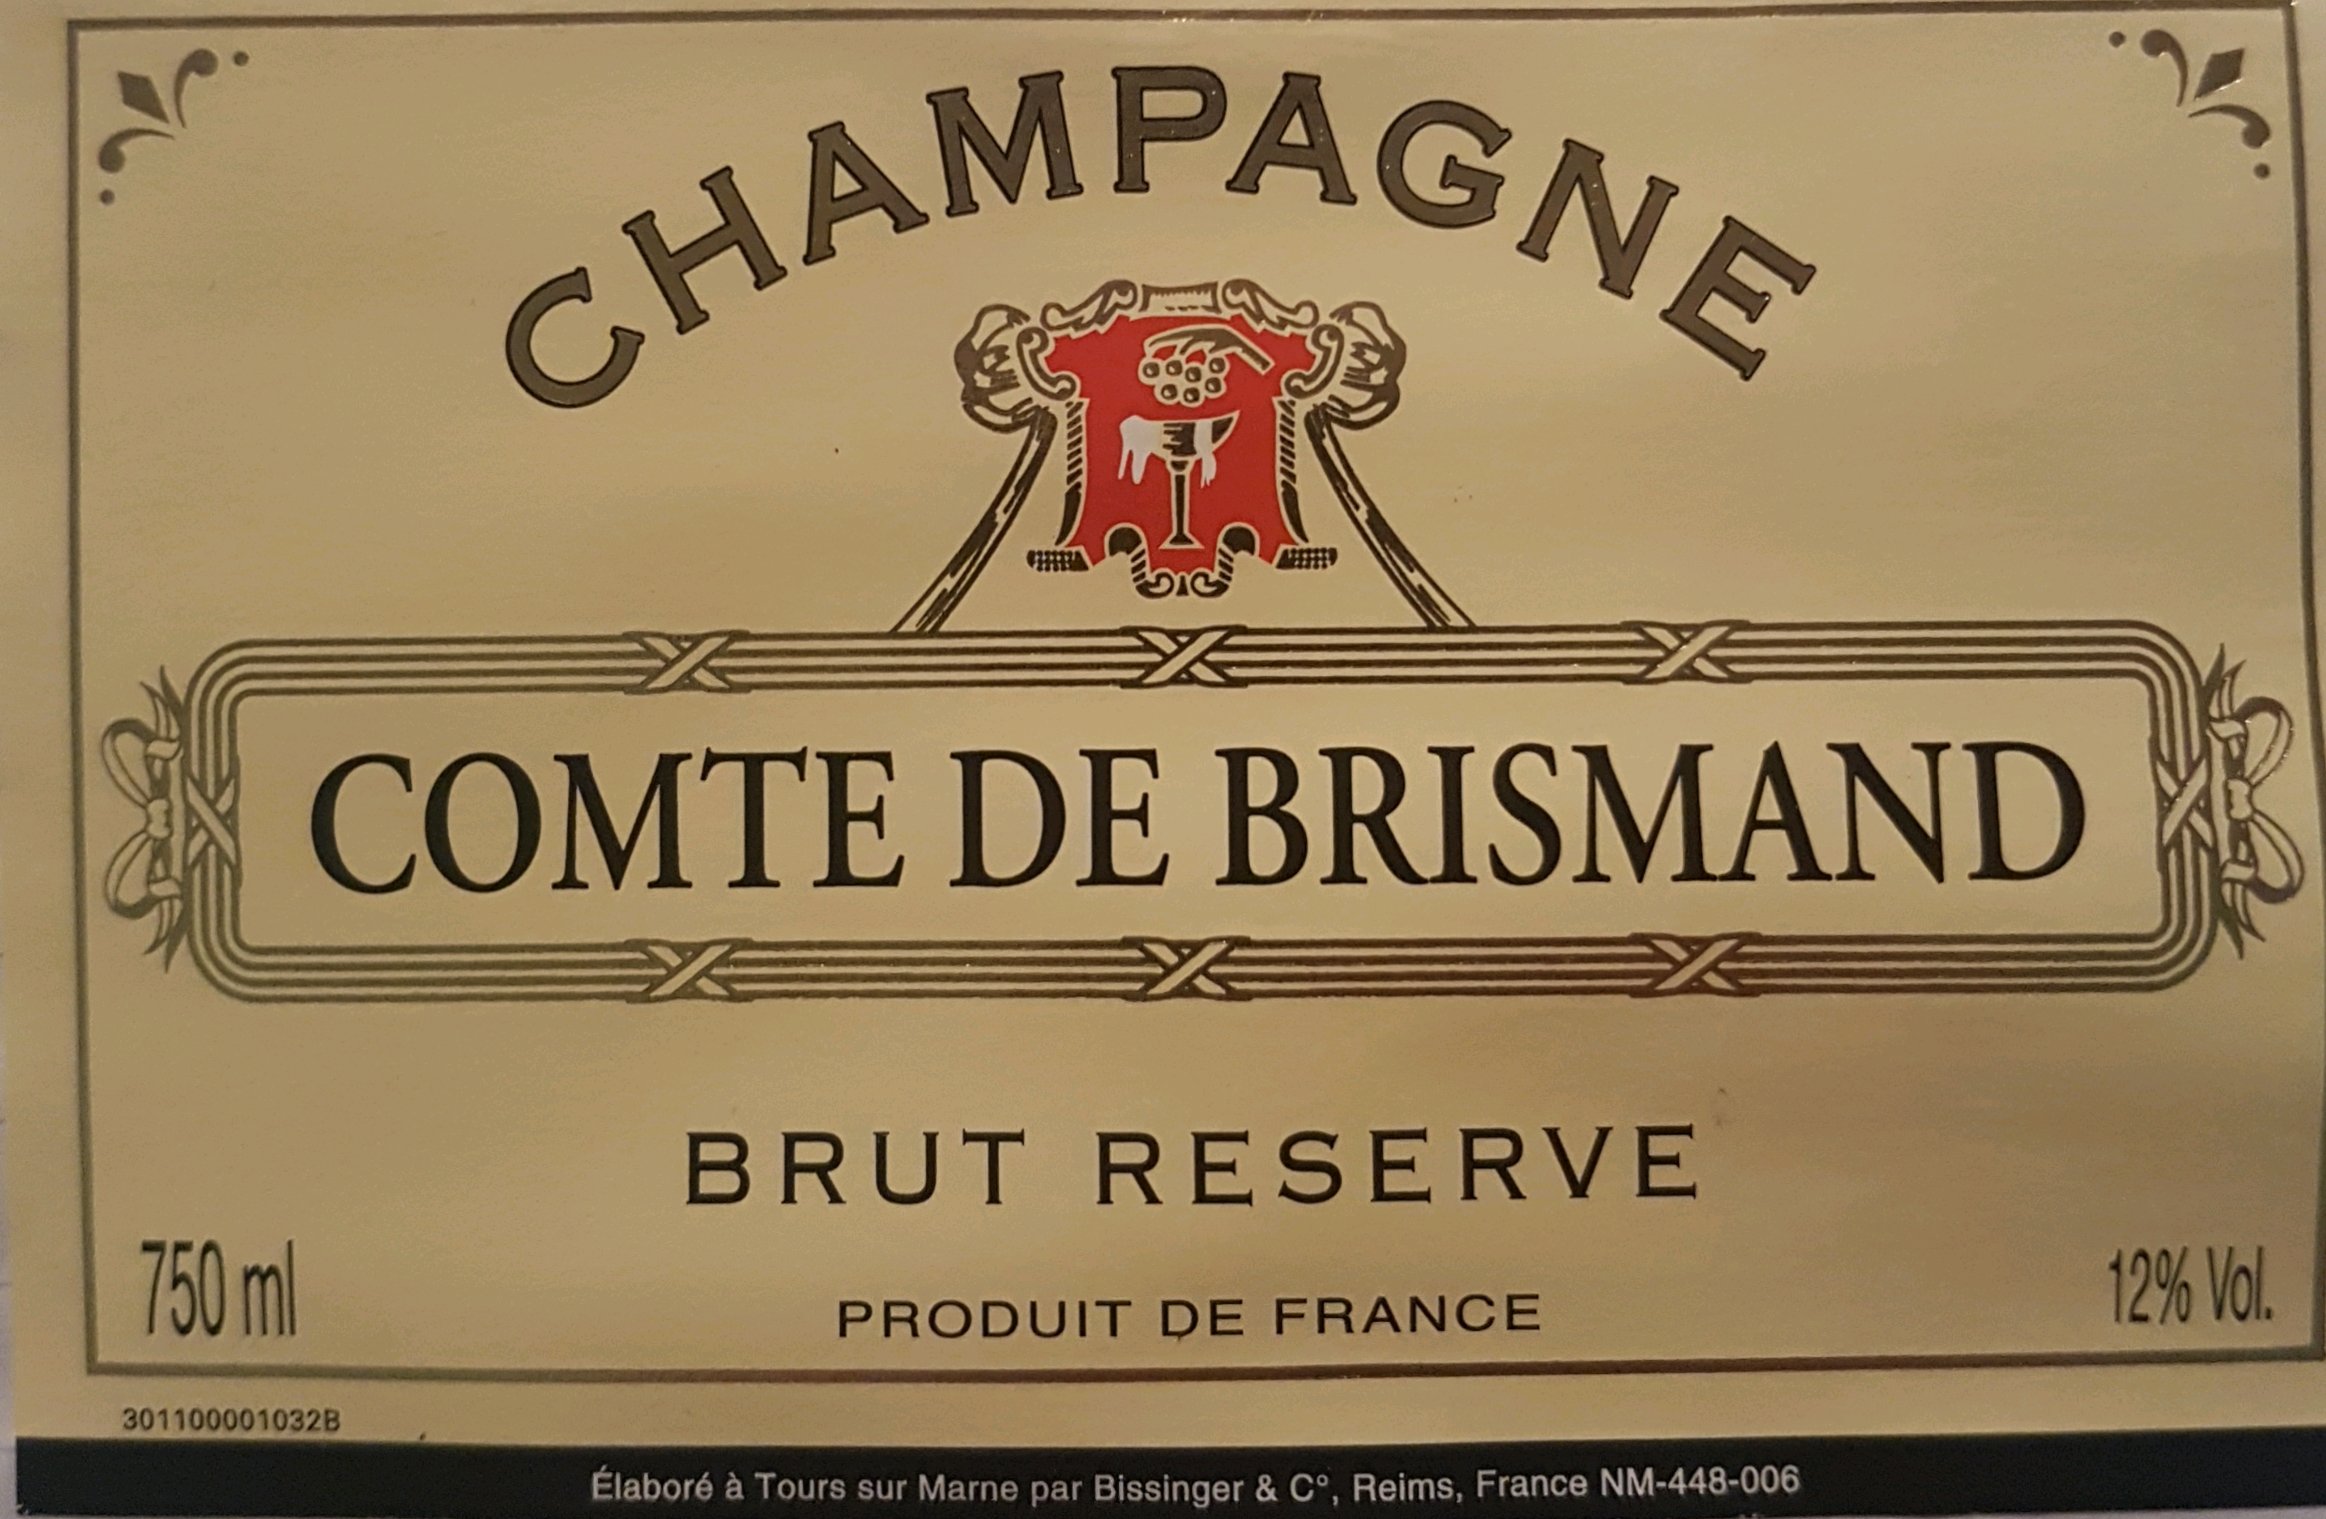 Comte de Brismand Brut Reserve Champagne France 12% – The Winesday Review